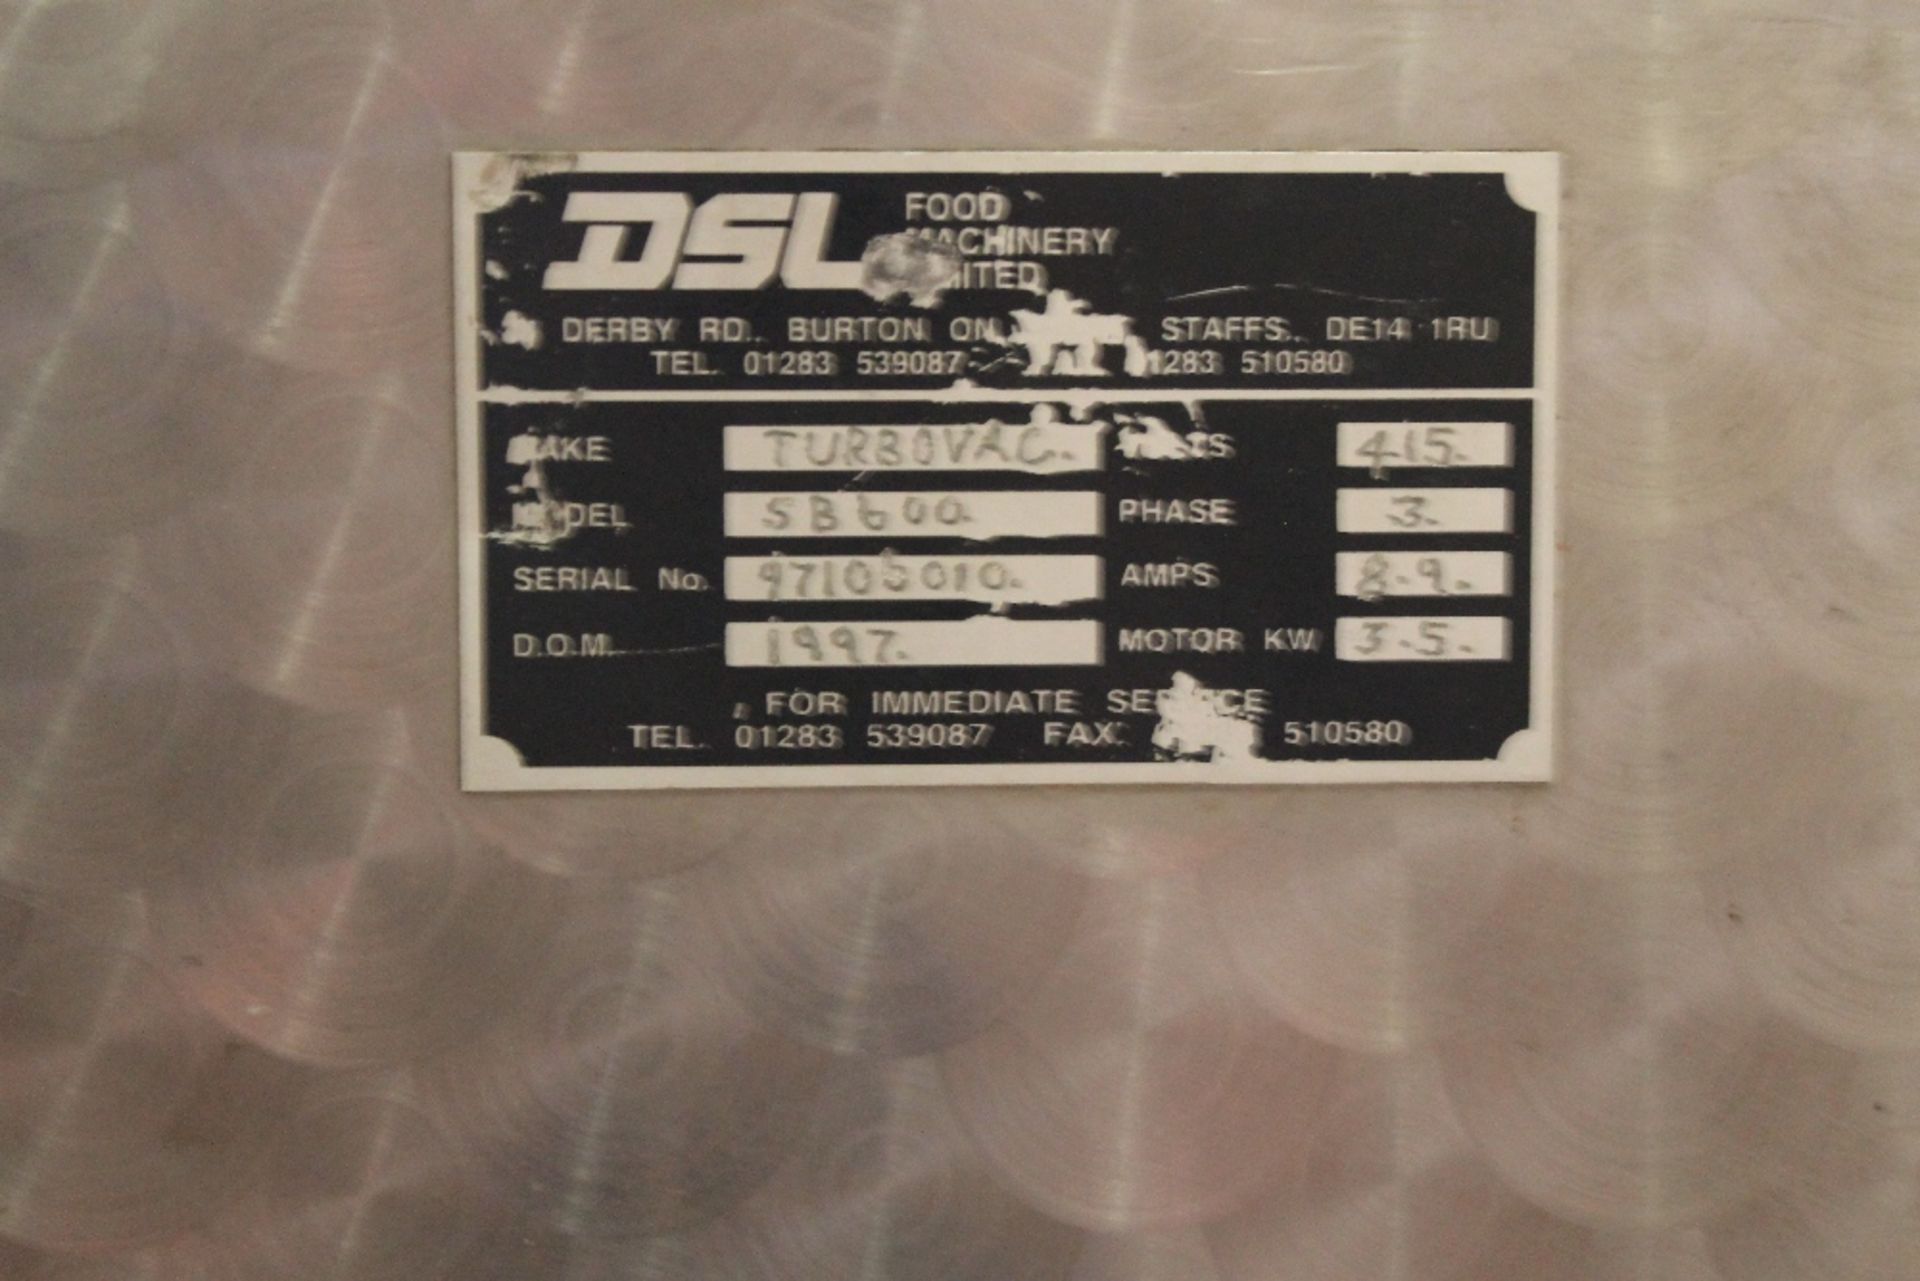 2 Bag Vacuum Sealing Machine – DSL Food Machinery – Serial 97106010   3-ph – Tested - Image 3 of 3